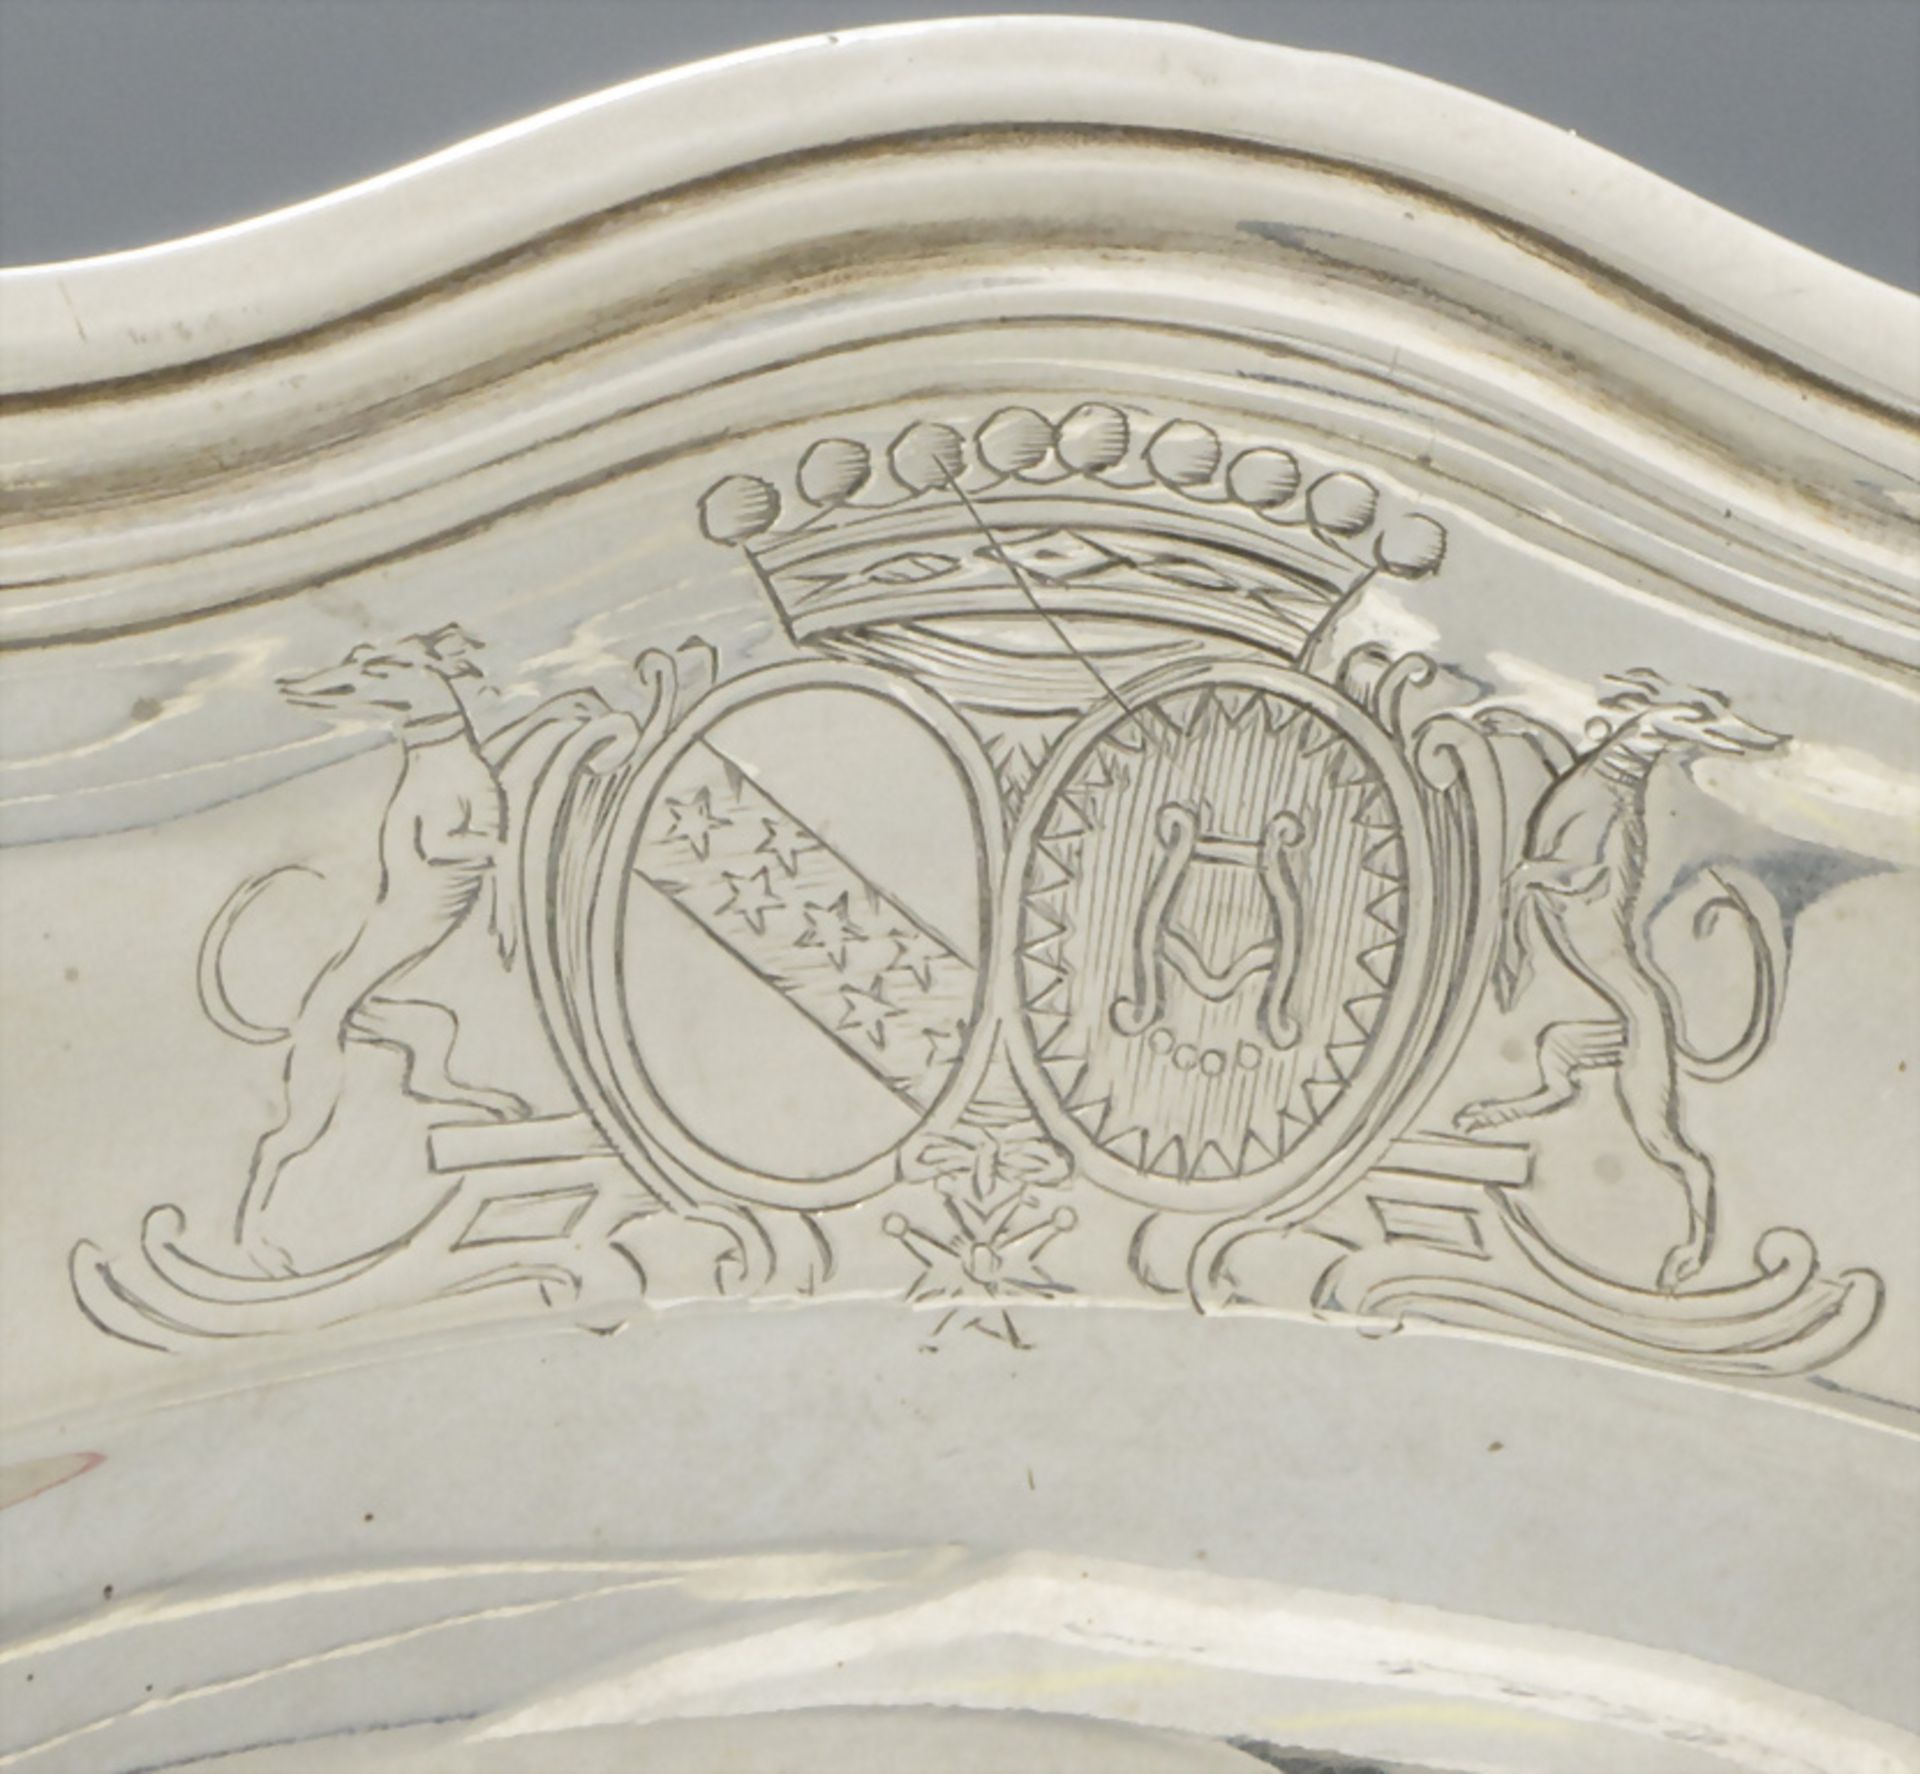 Allianzteller / A silver alliance plate, Claude Genu, Paris, 1744-1750 - Image 3 of 9